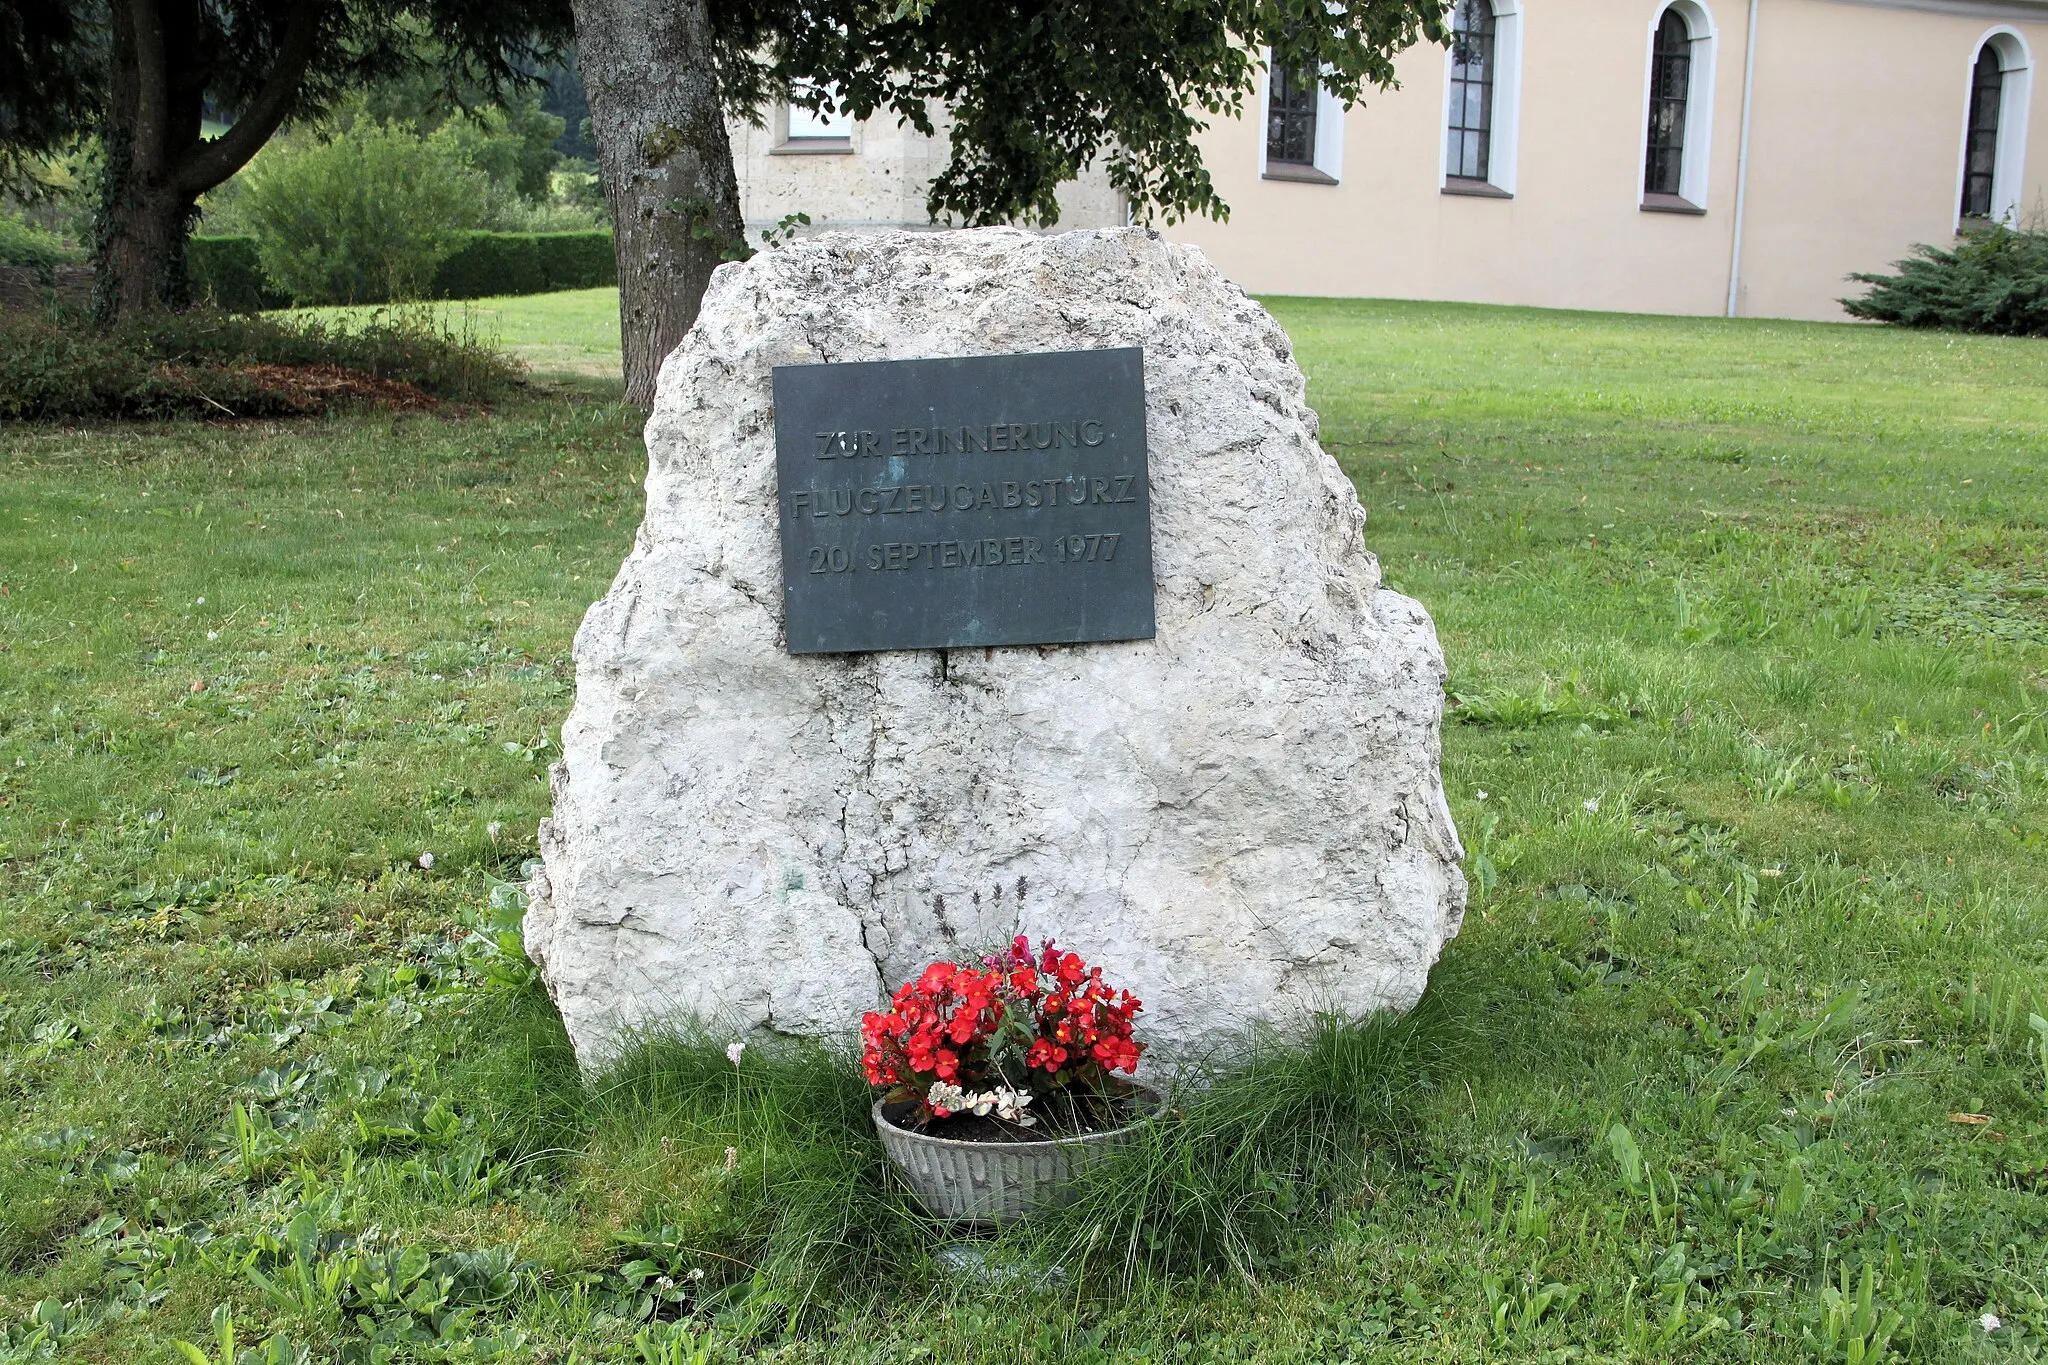 Photo showing: Weilen unter den Rinnen: Memorial stone commemorating the airplane crash of 20 September 1977